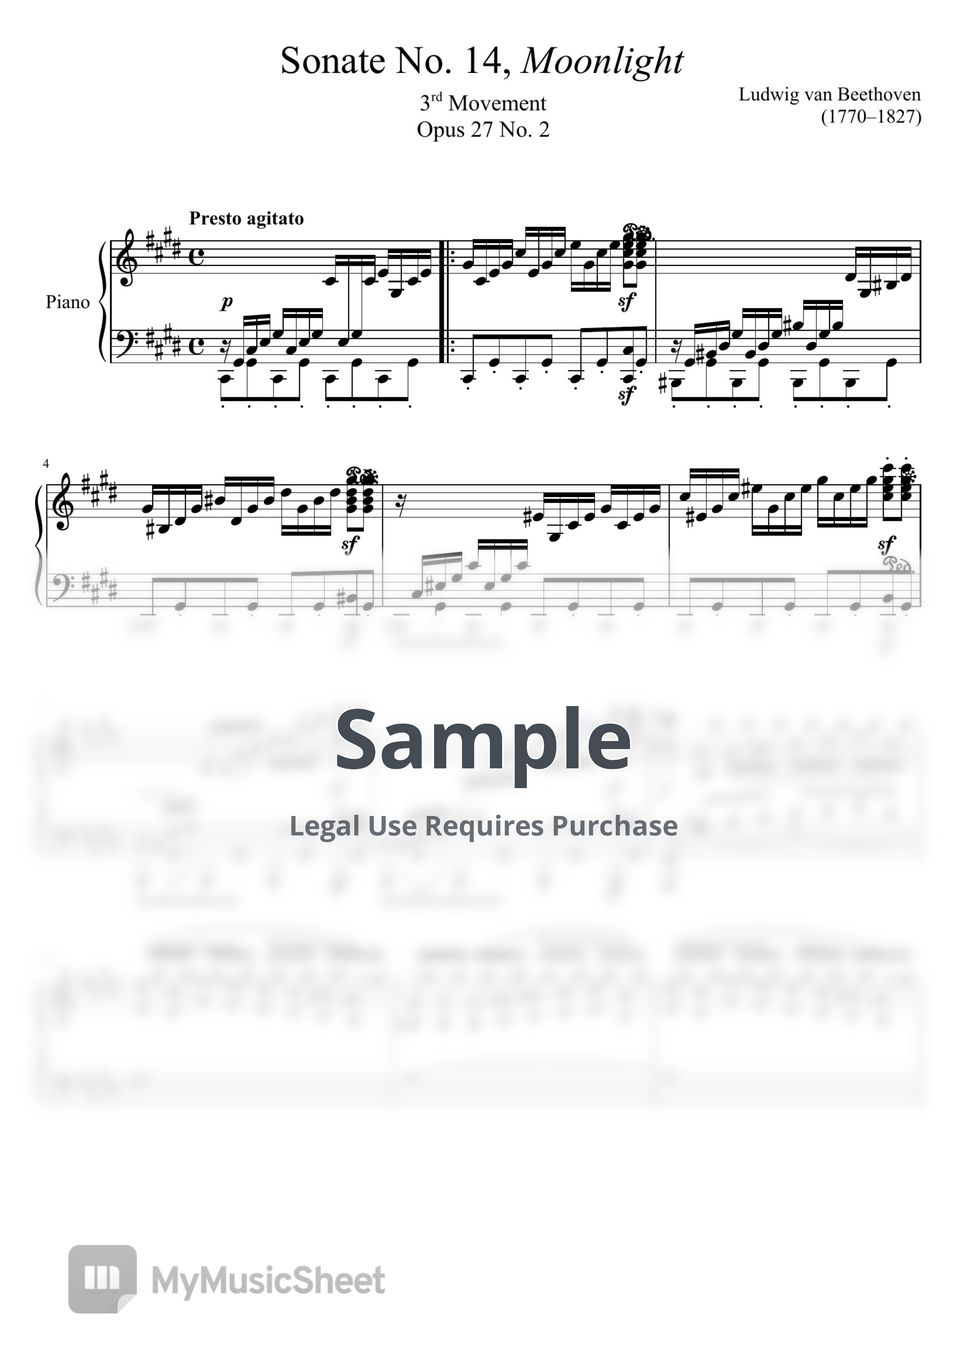 Ludwing Van Beethoven - Moonlight Sonata No 14 (piano) by Sheet Music For String